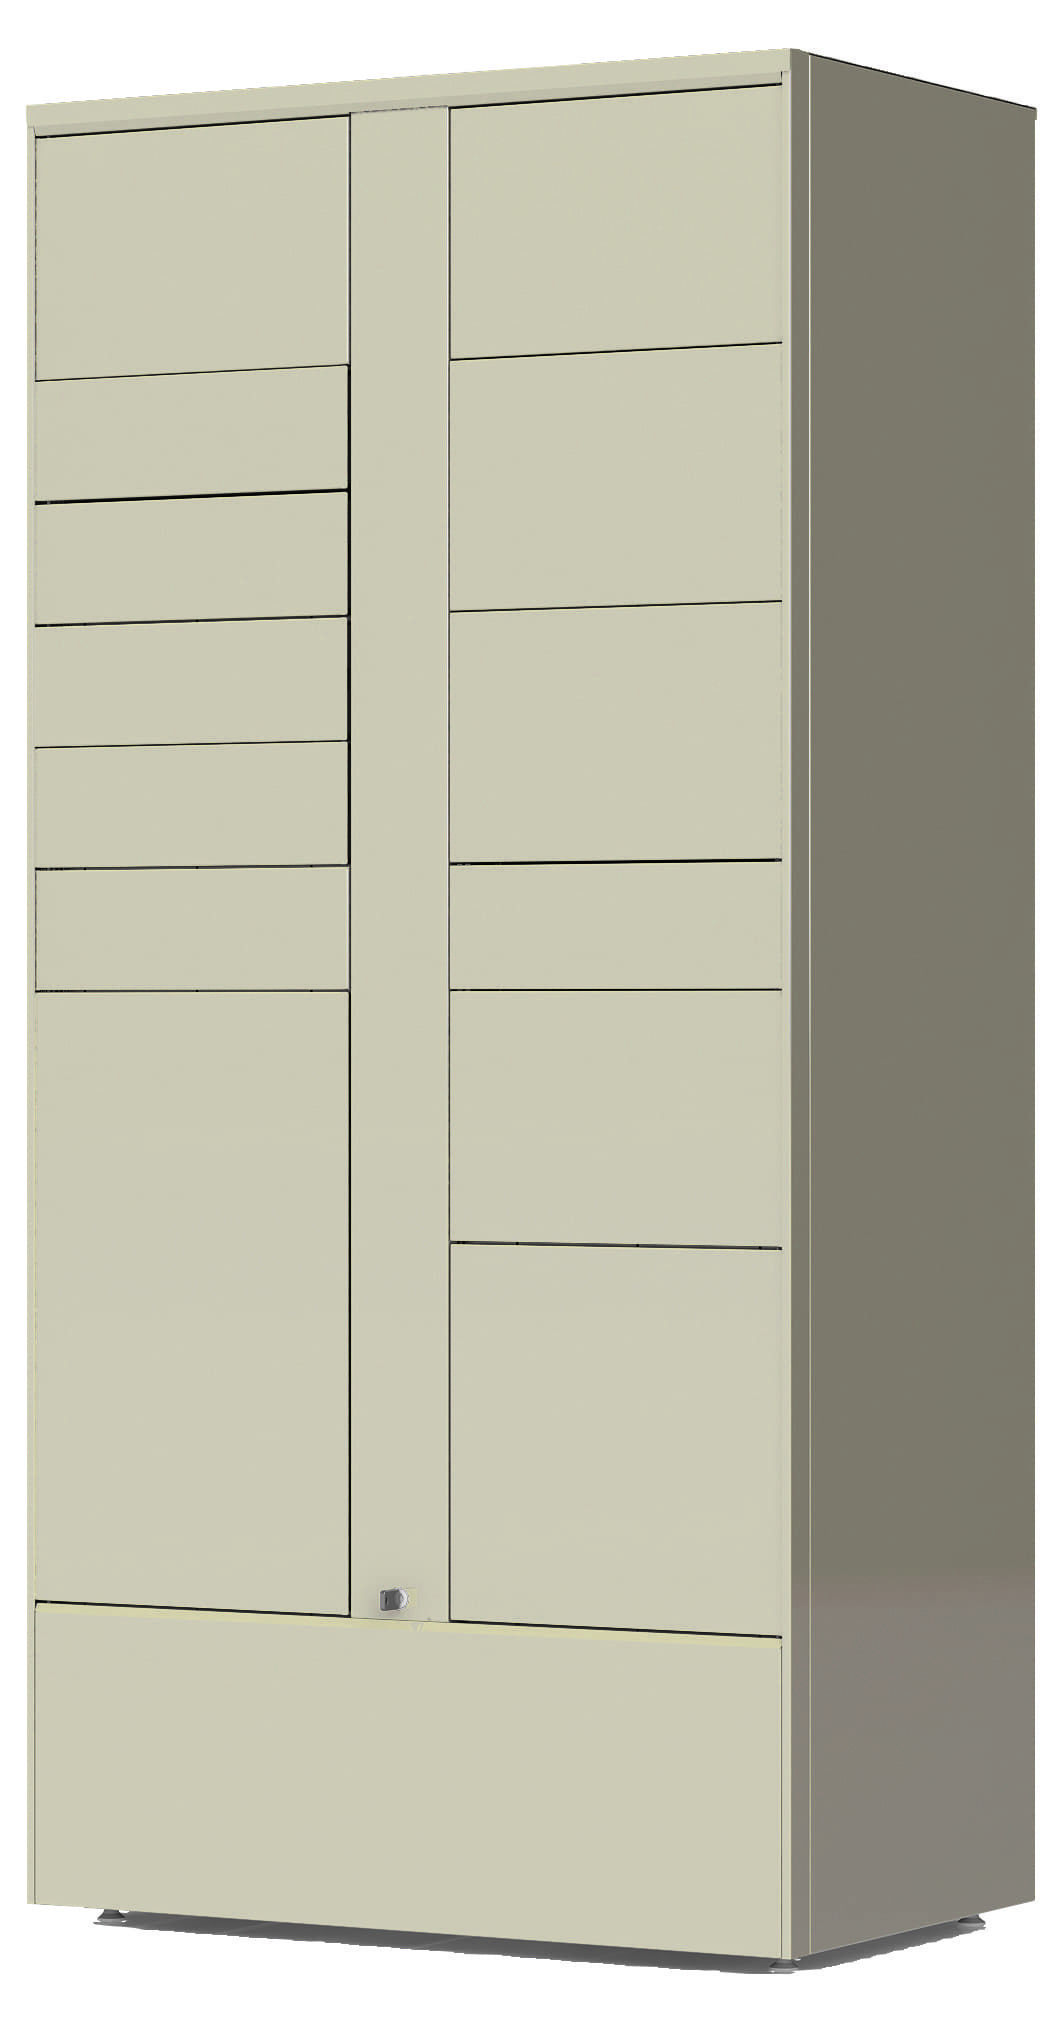 indoor package locker module